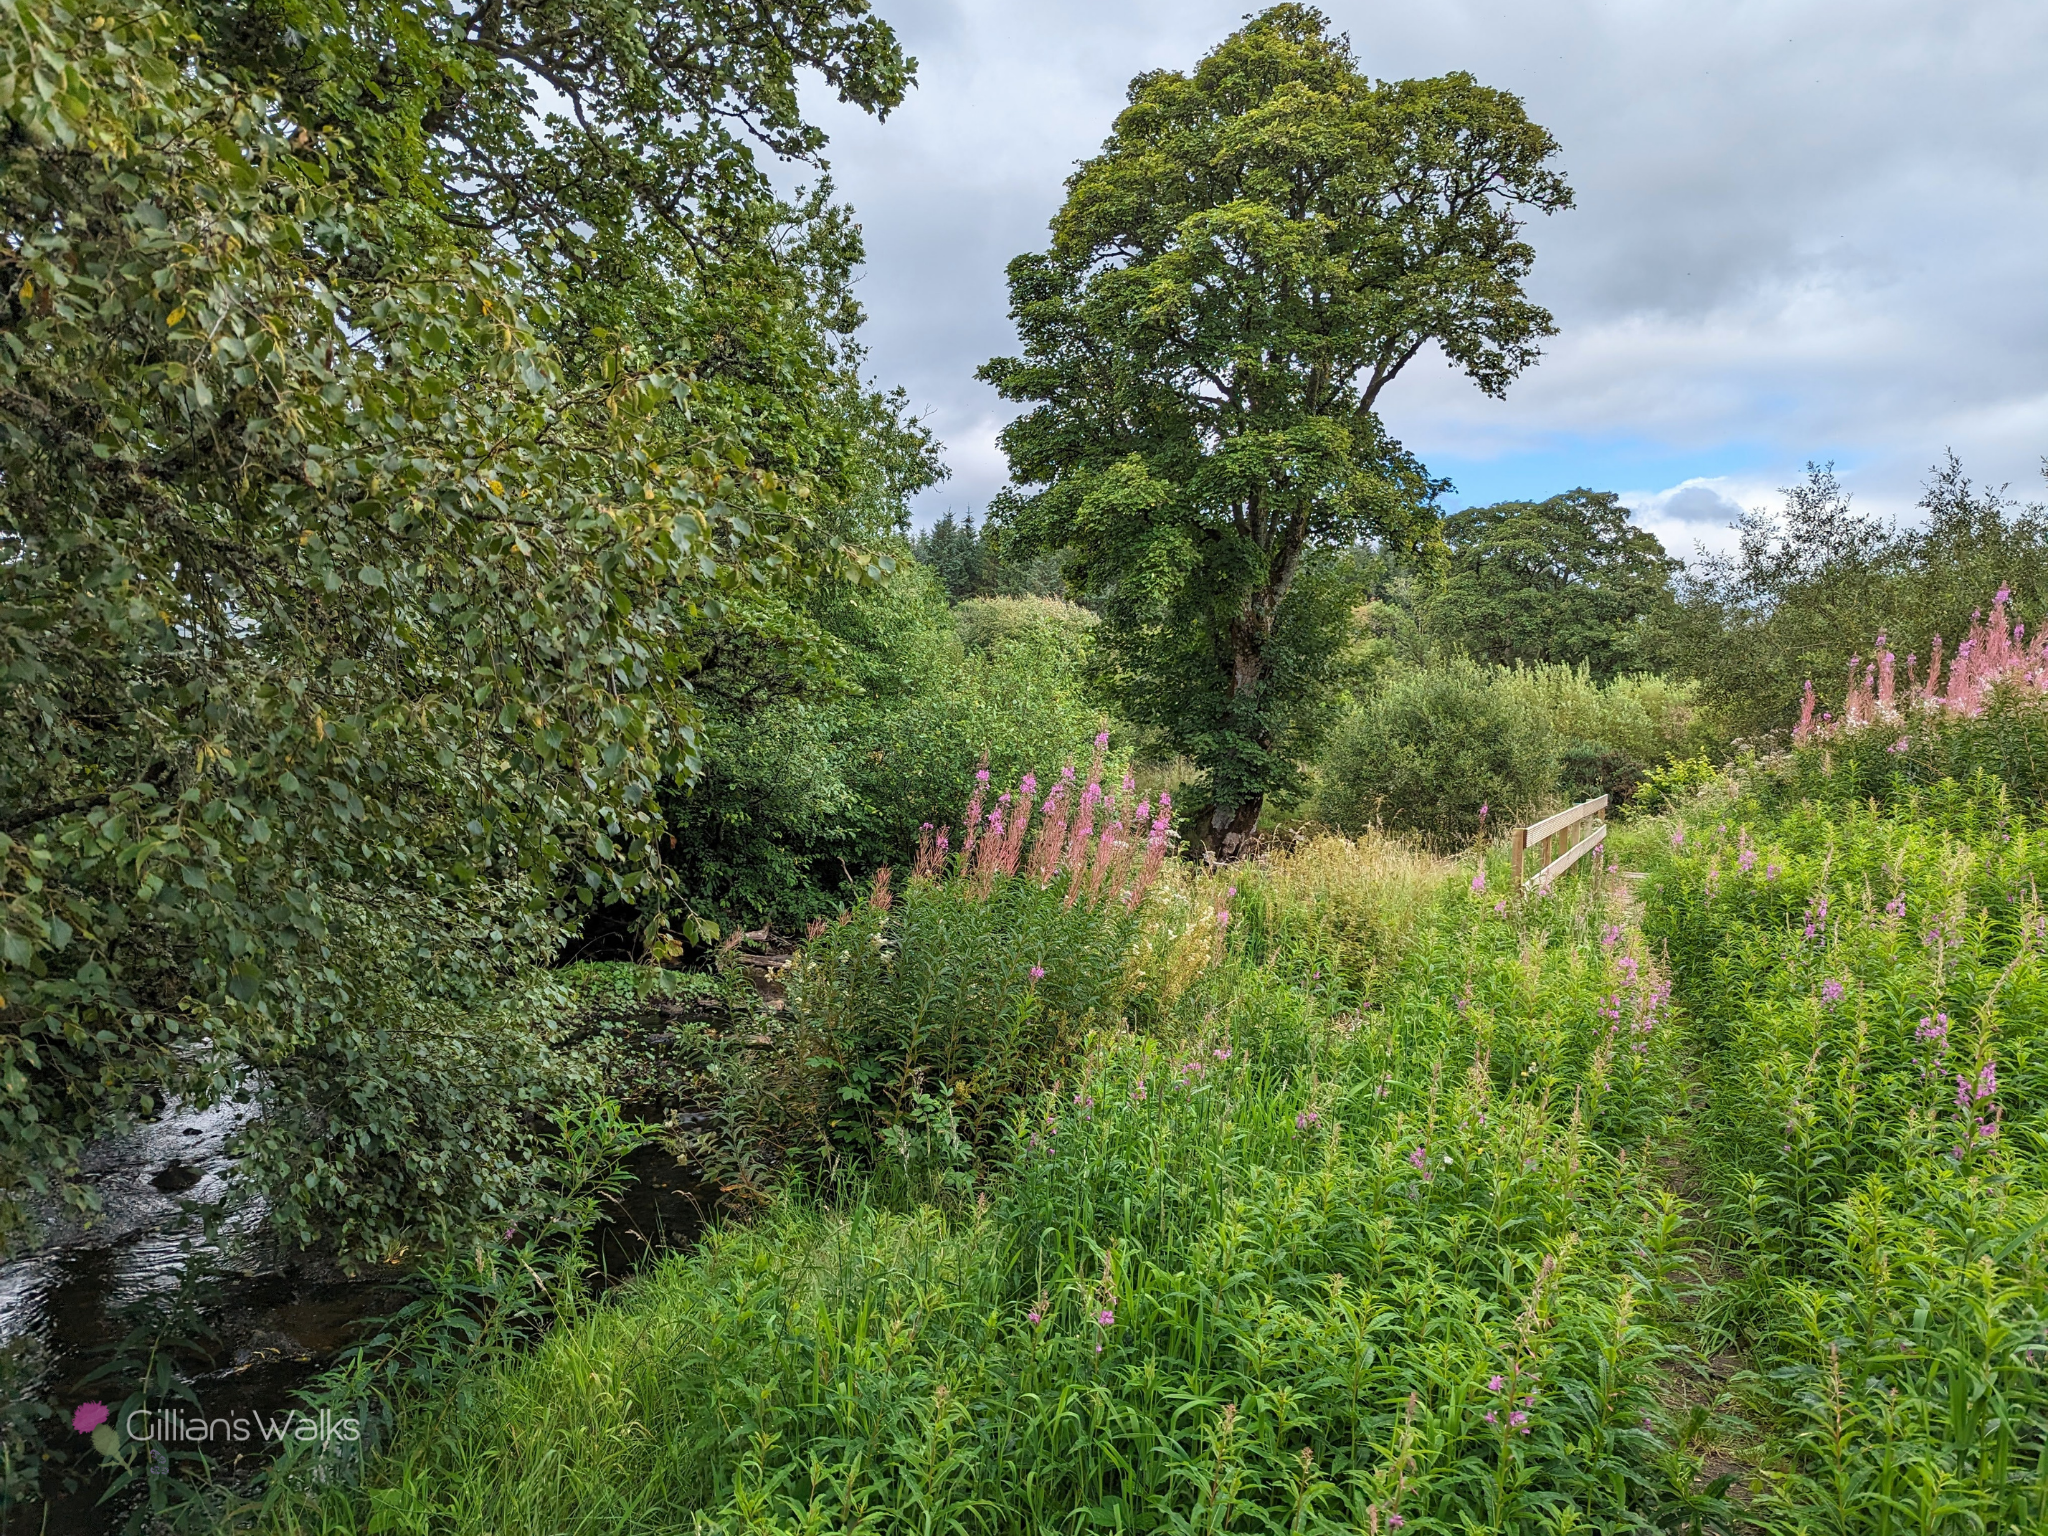 Lush green vegetation, trees and wild flowers encroaching on a narrow riverside footpath